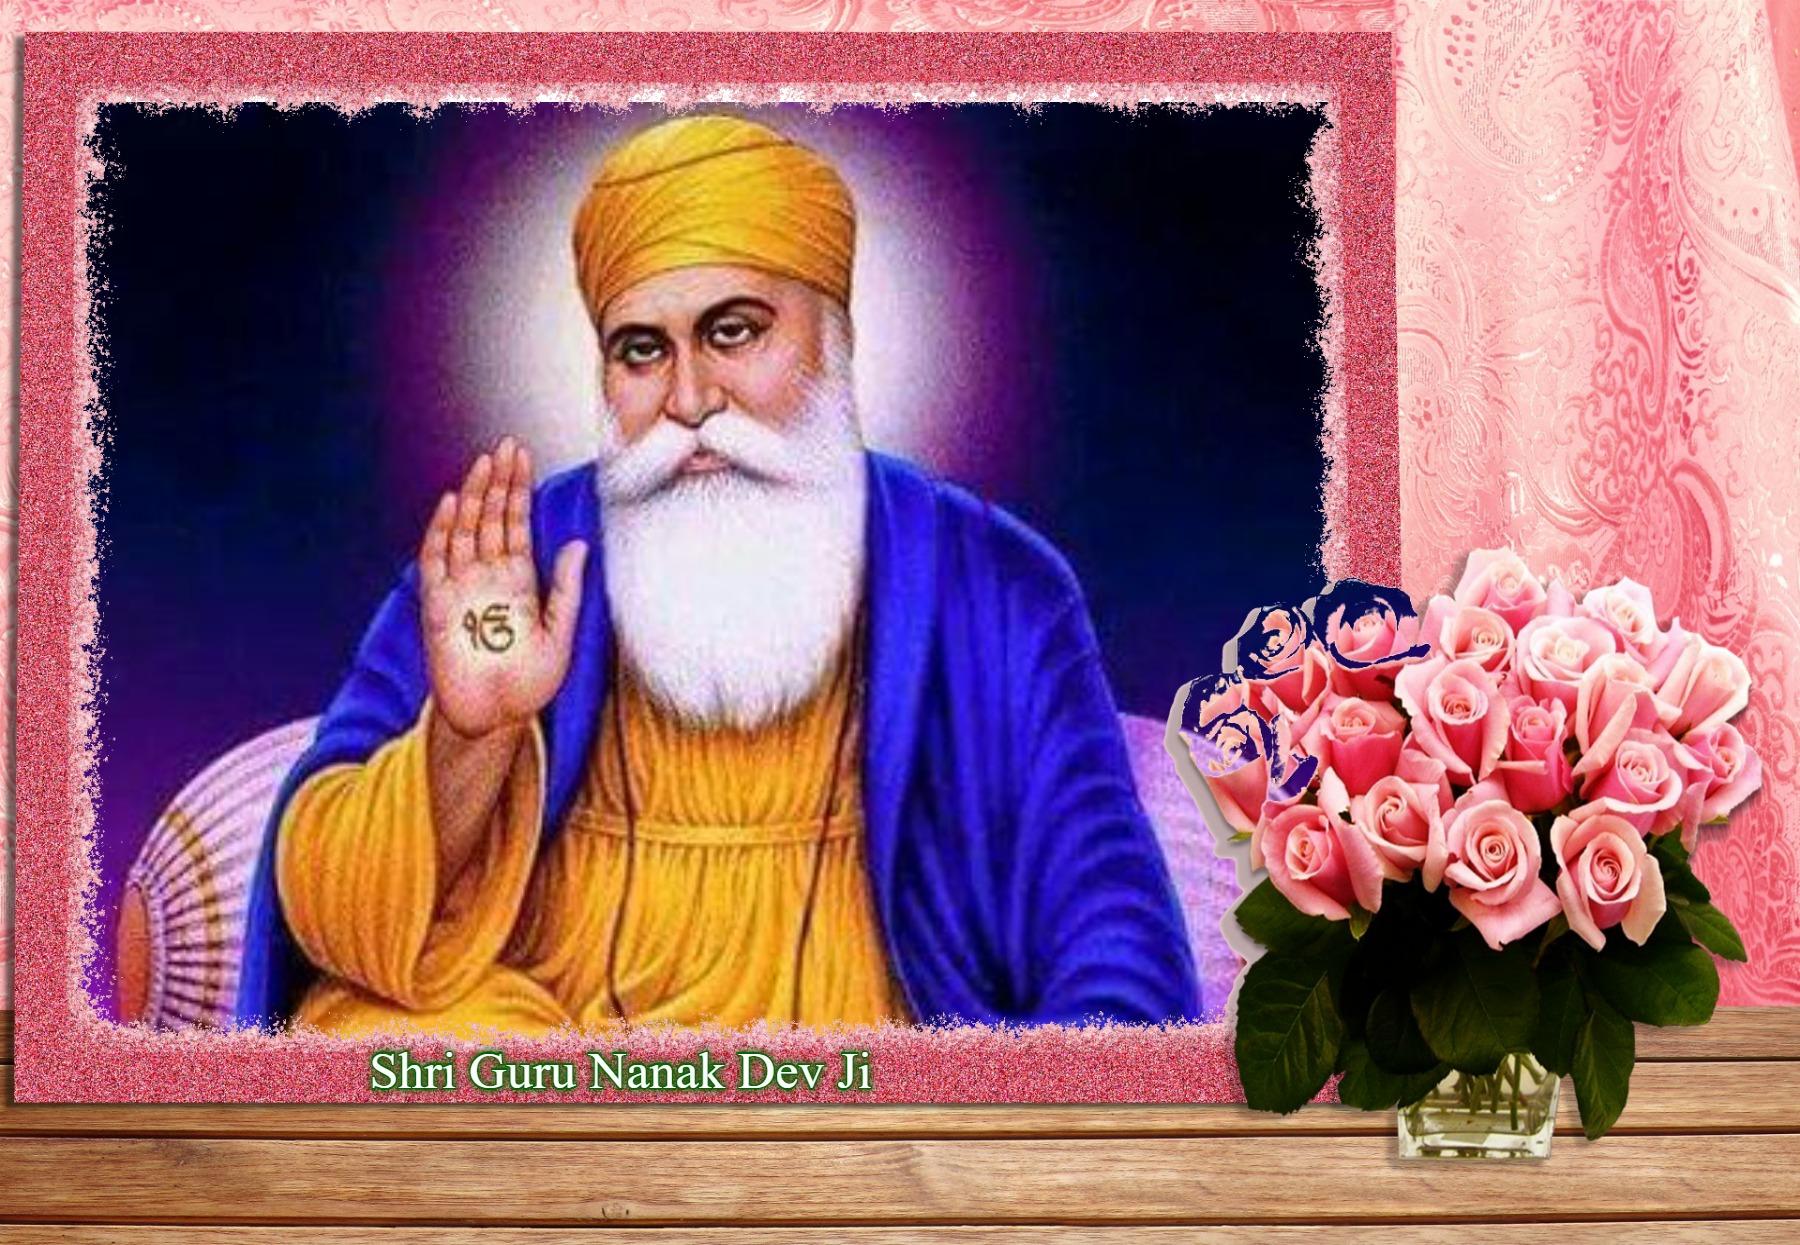 You are currently viewing “Celebrating Birth Anniversary of Guru Nanak Dev Ji”